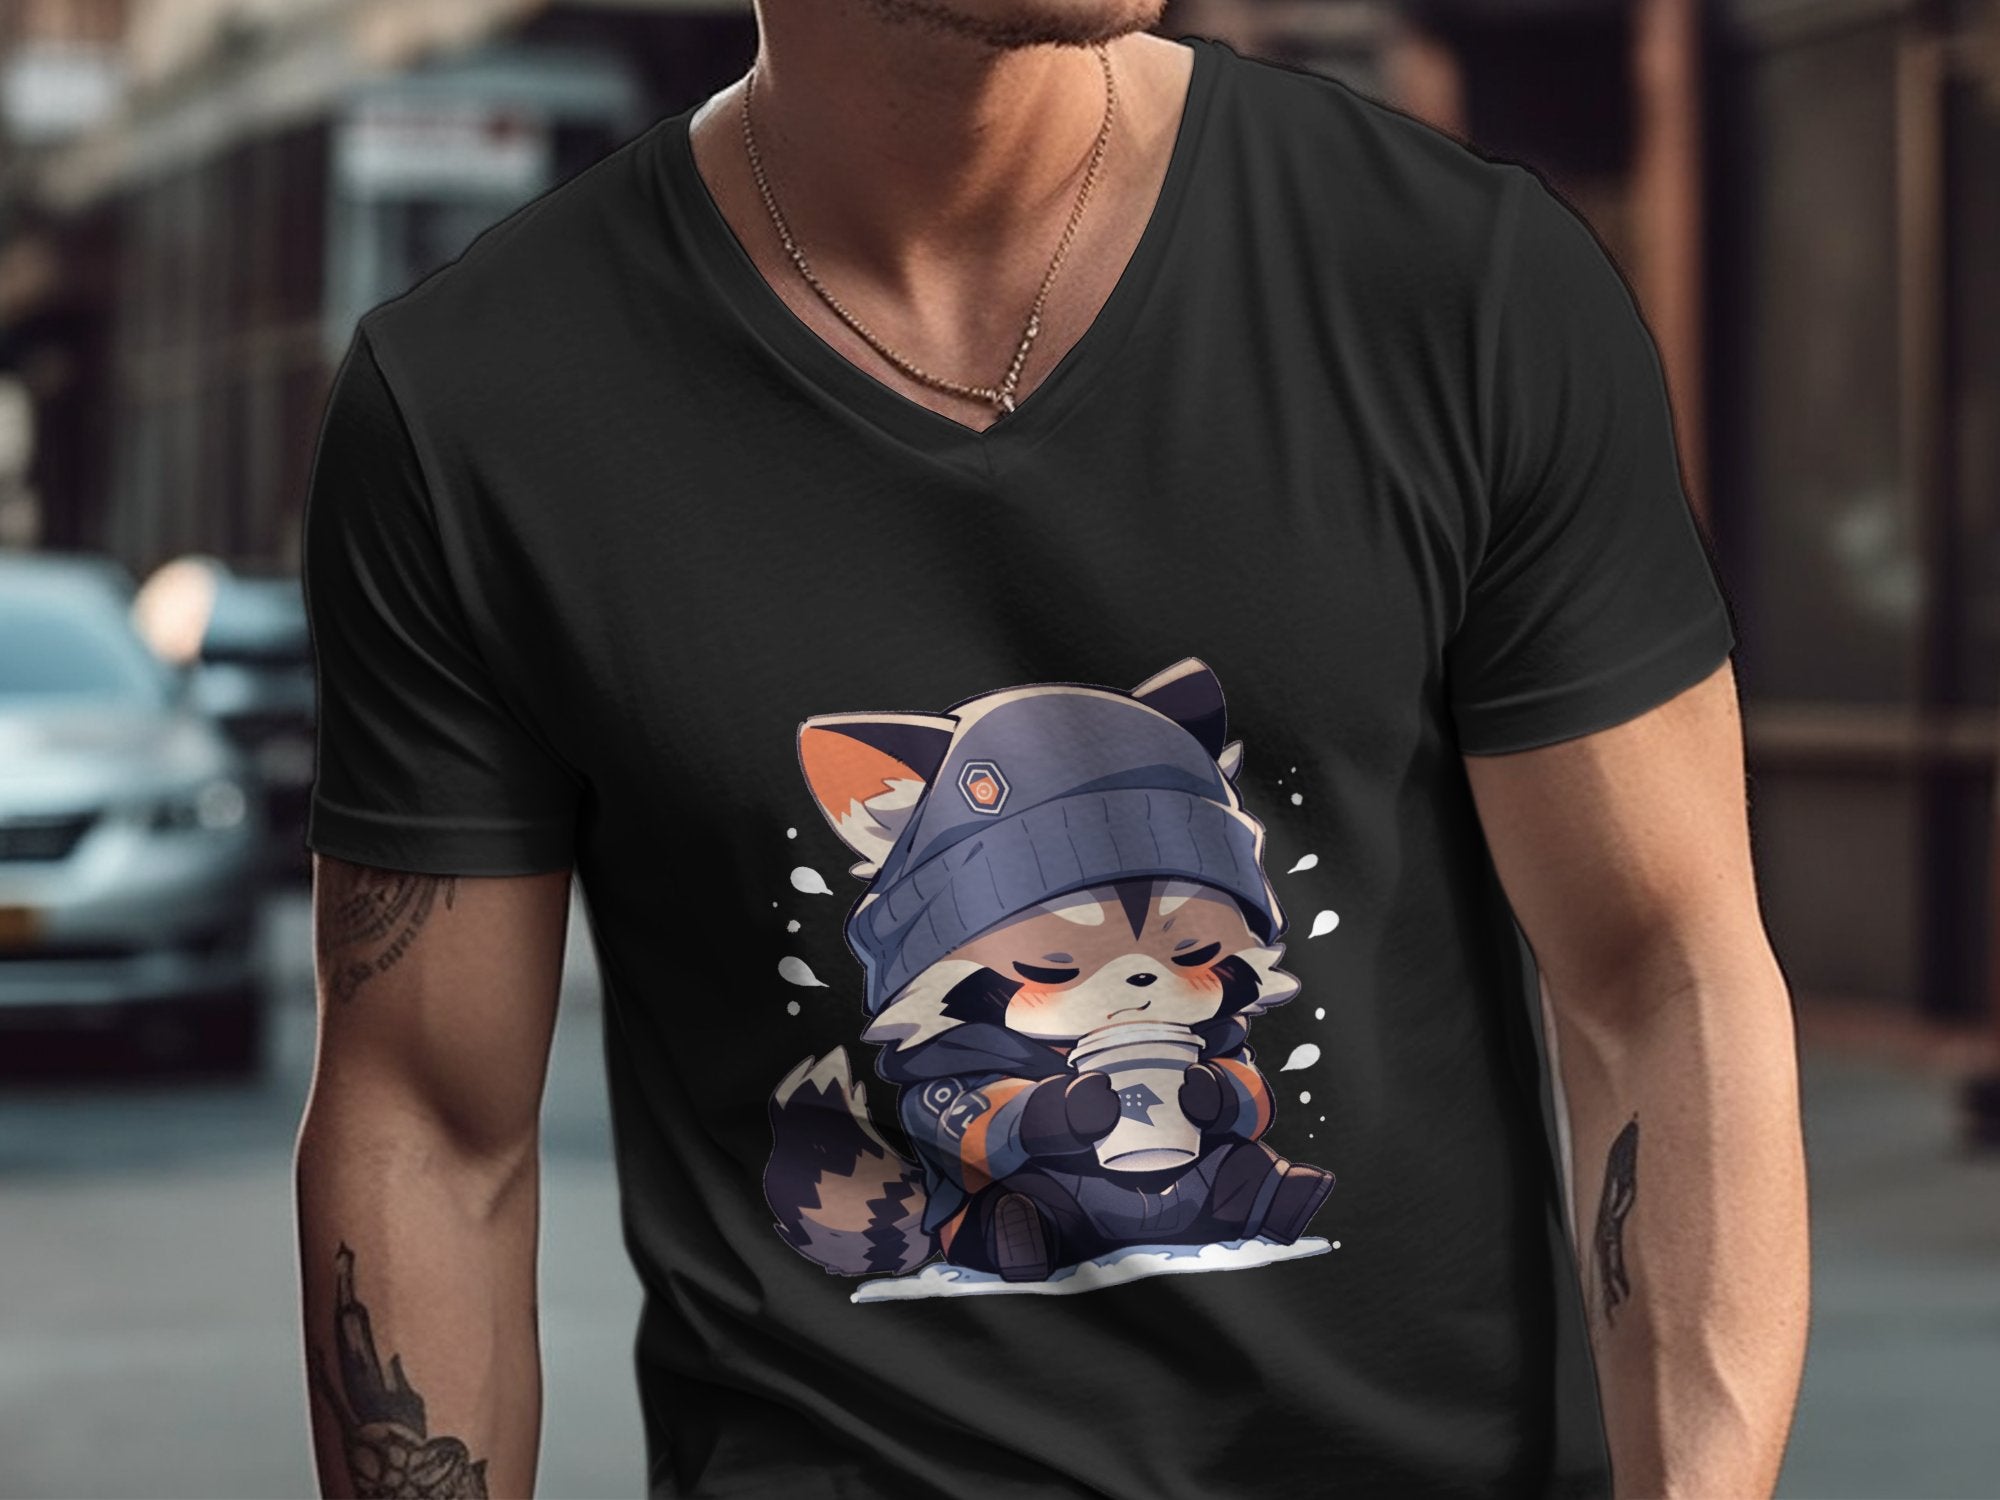 Cute Coffee Raccoon V-Neck T-Shirt - MiTo Store